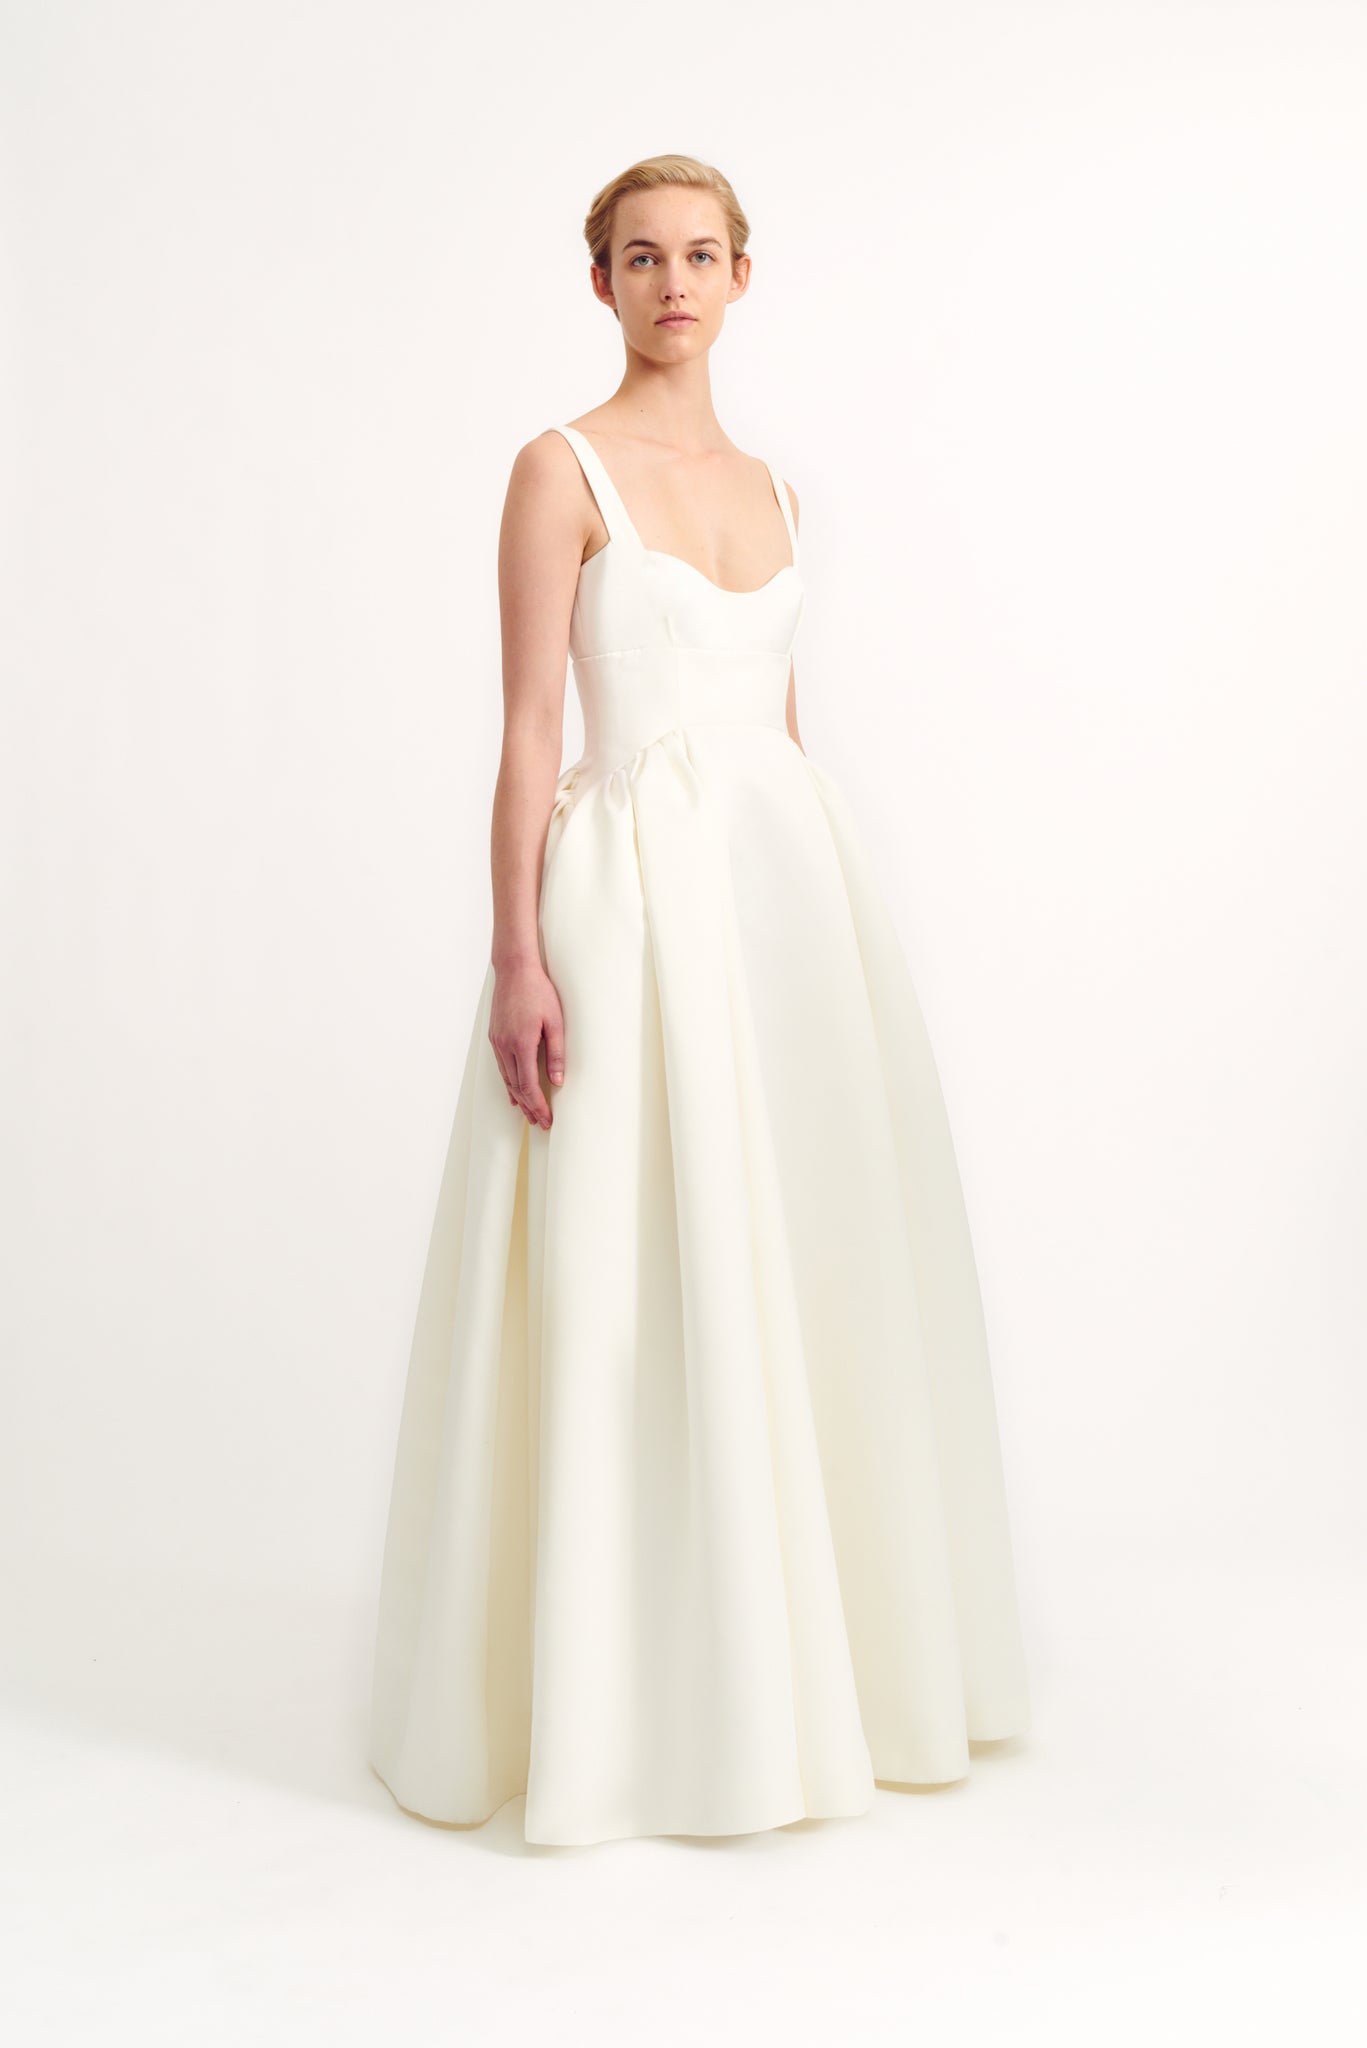 Diamond Bridal Dress in Ivory Genzianella front